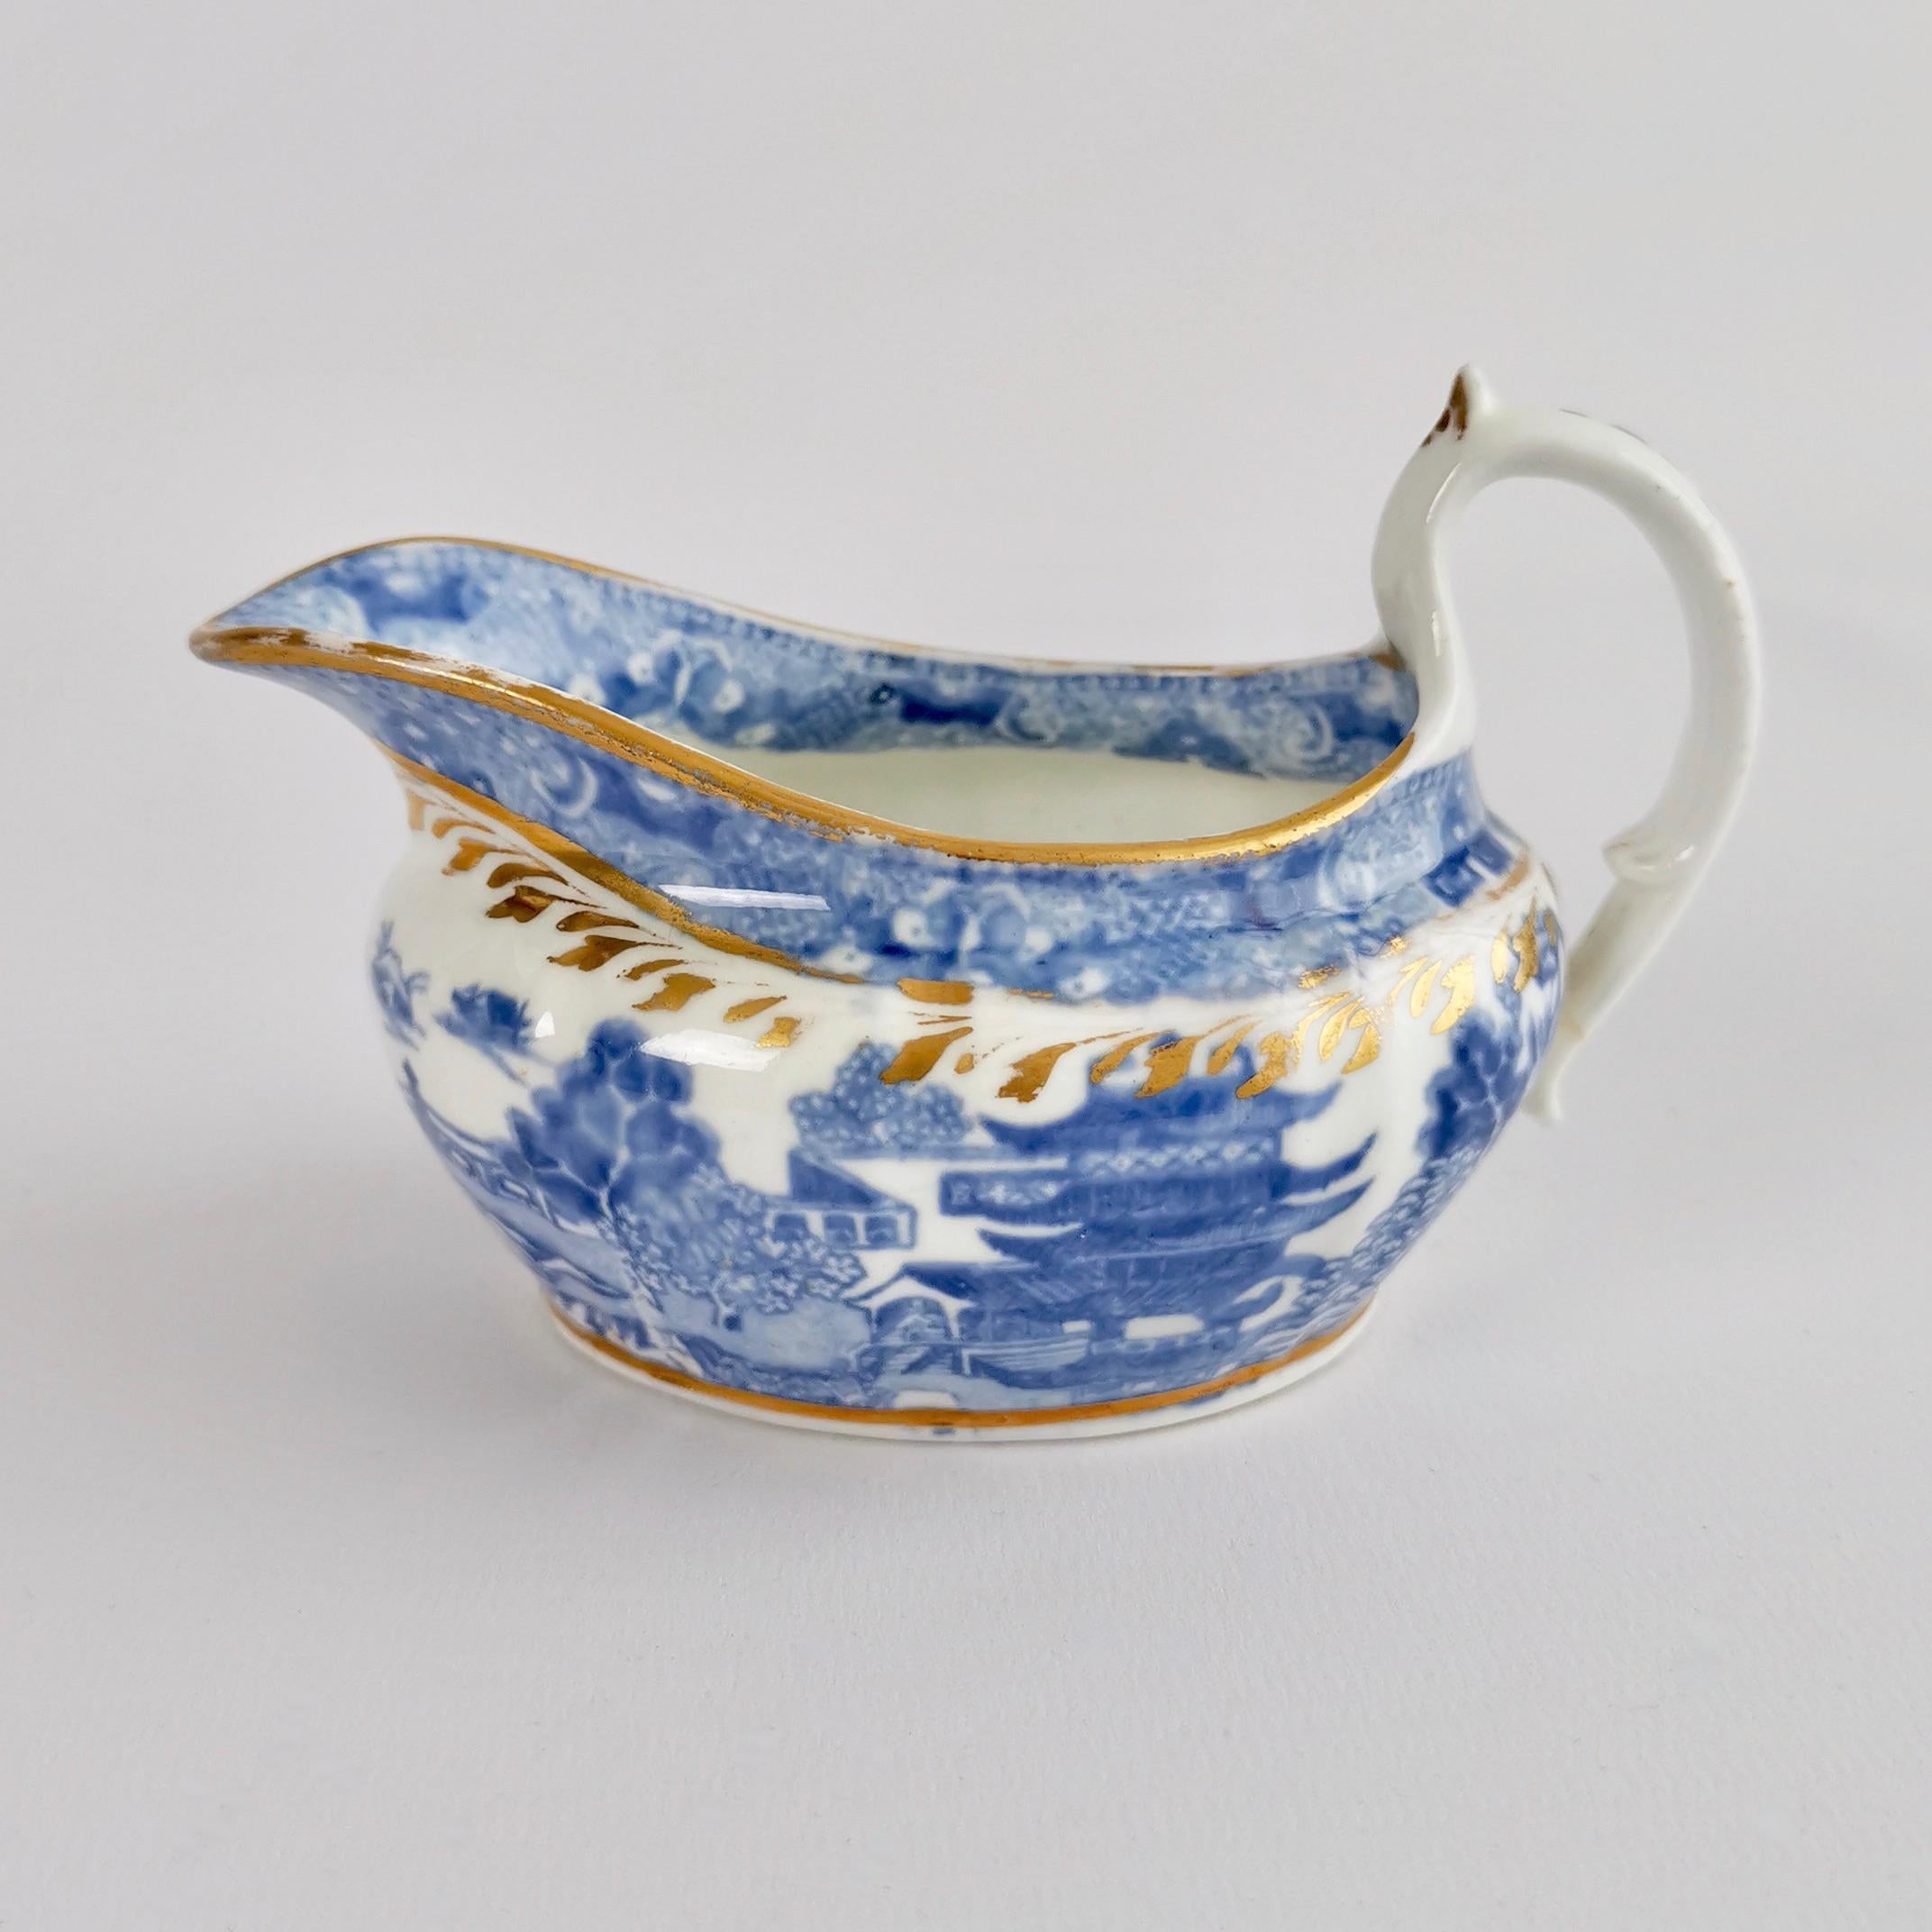 Early 19th Century Miles Mason Tea Service, Pagoda Pattern Blue and White Transfer, Regency